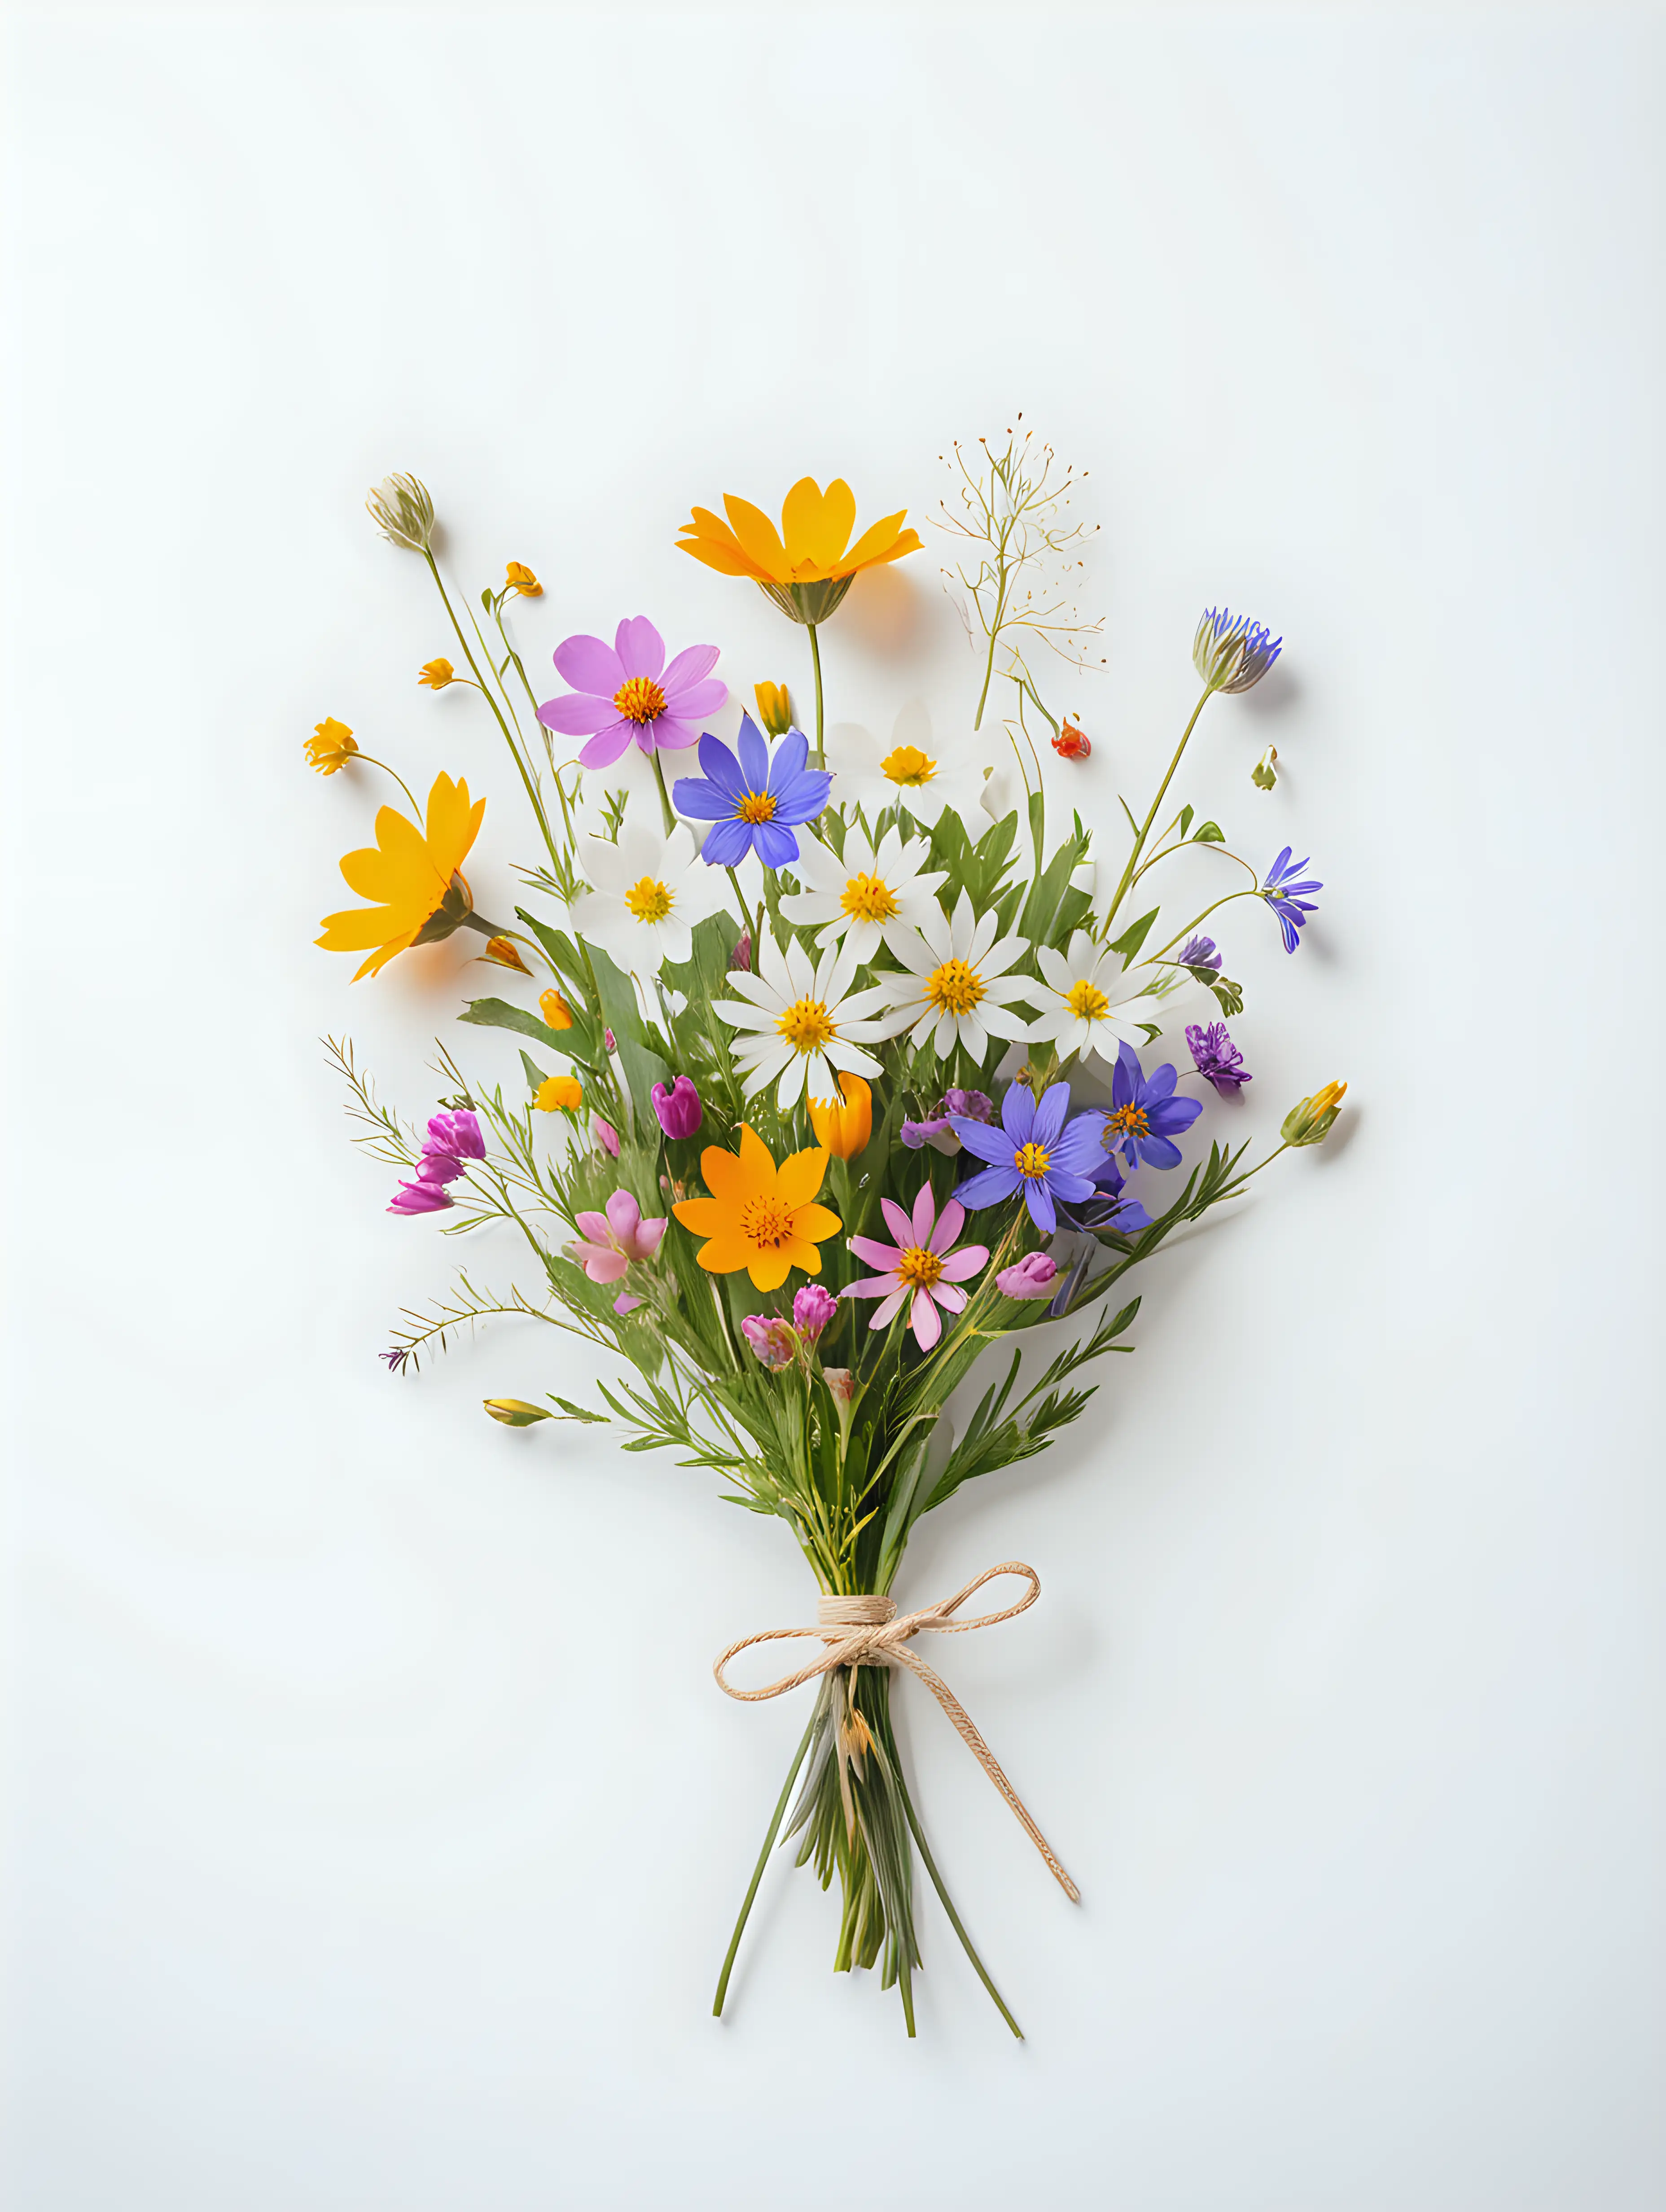 wildflower bouqet, spring flowers, minimalist, white background